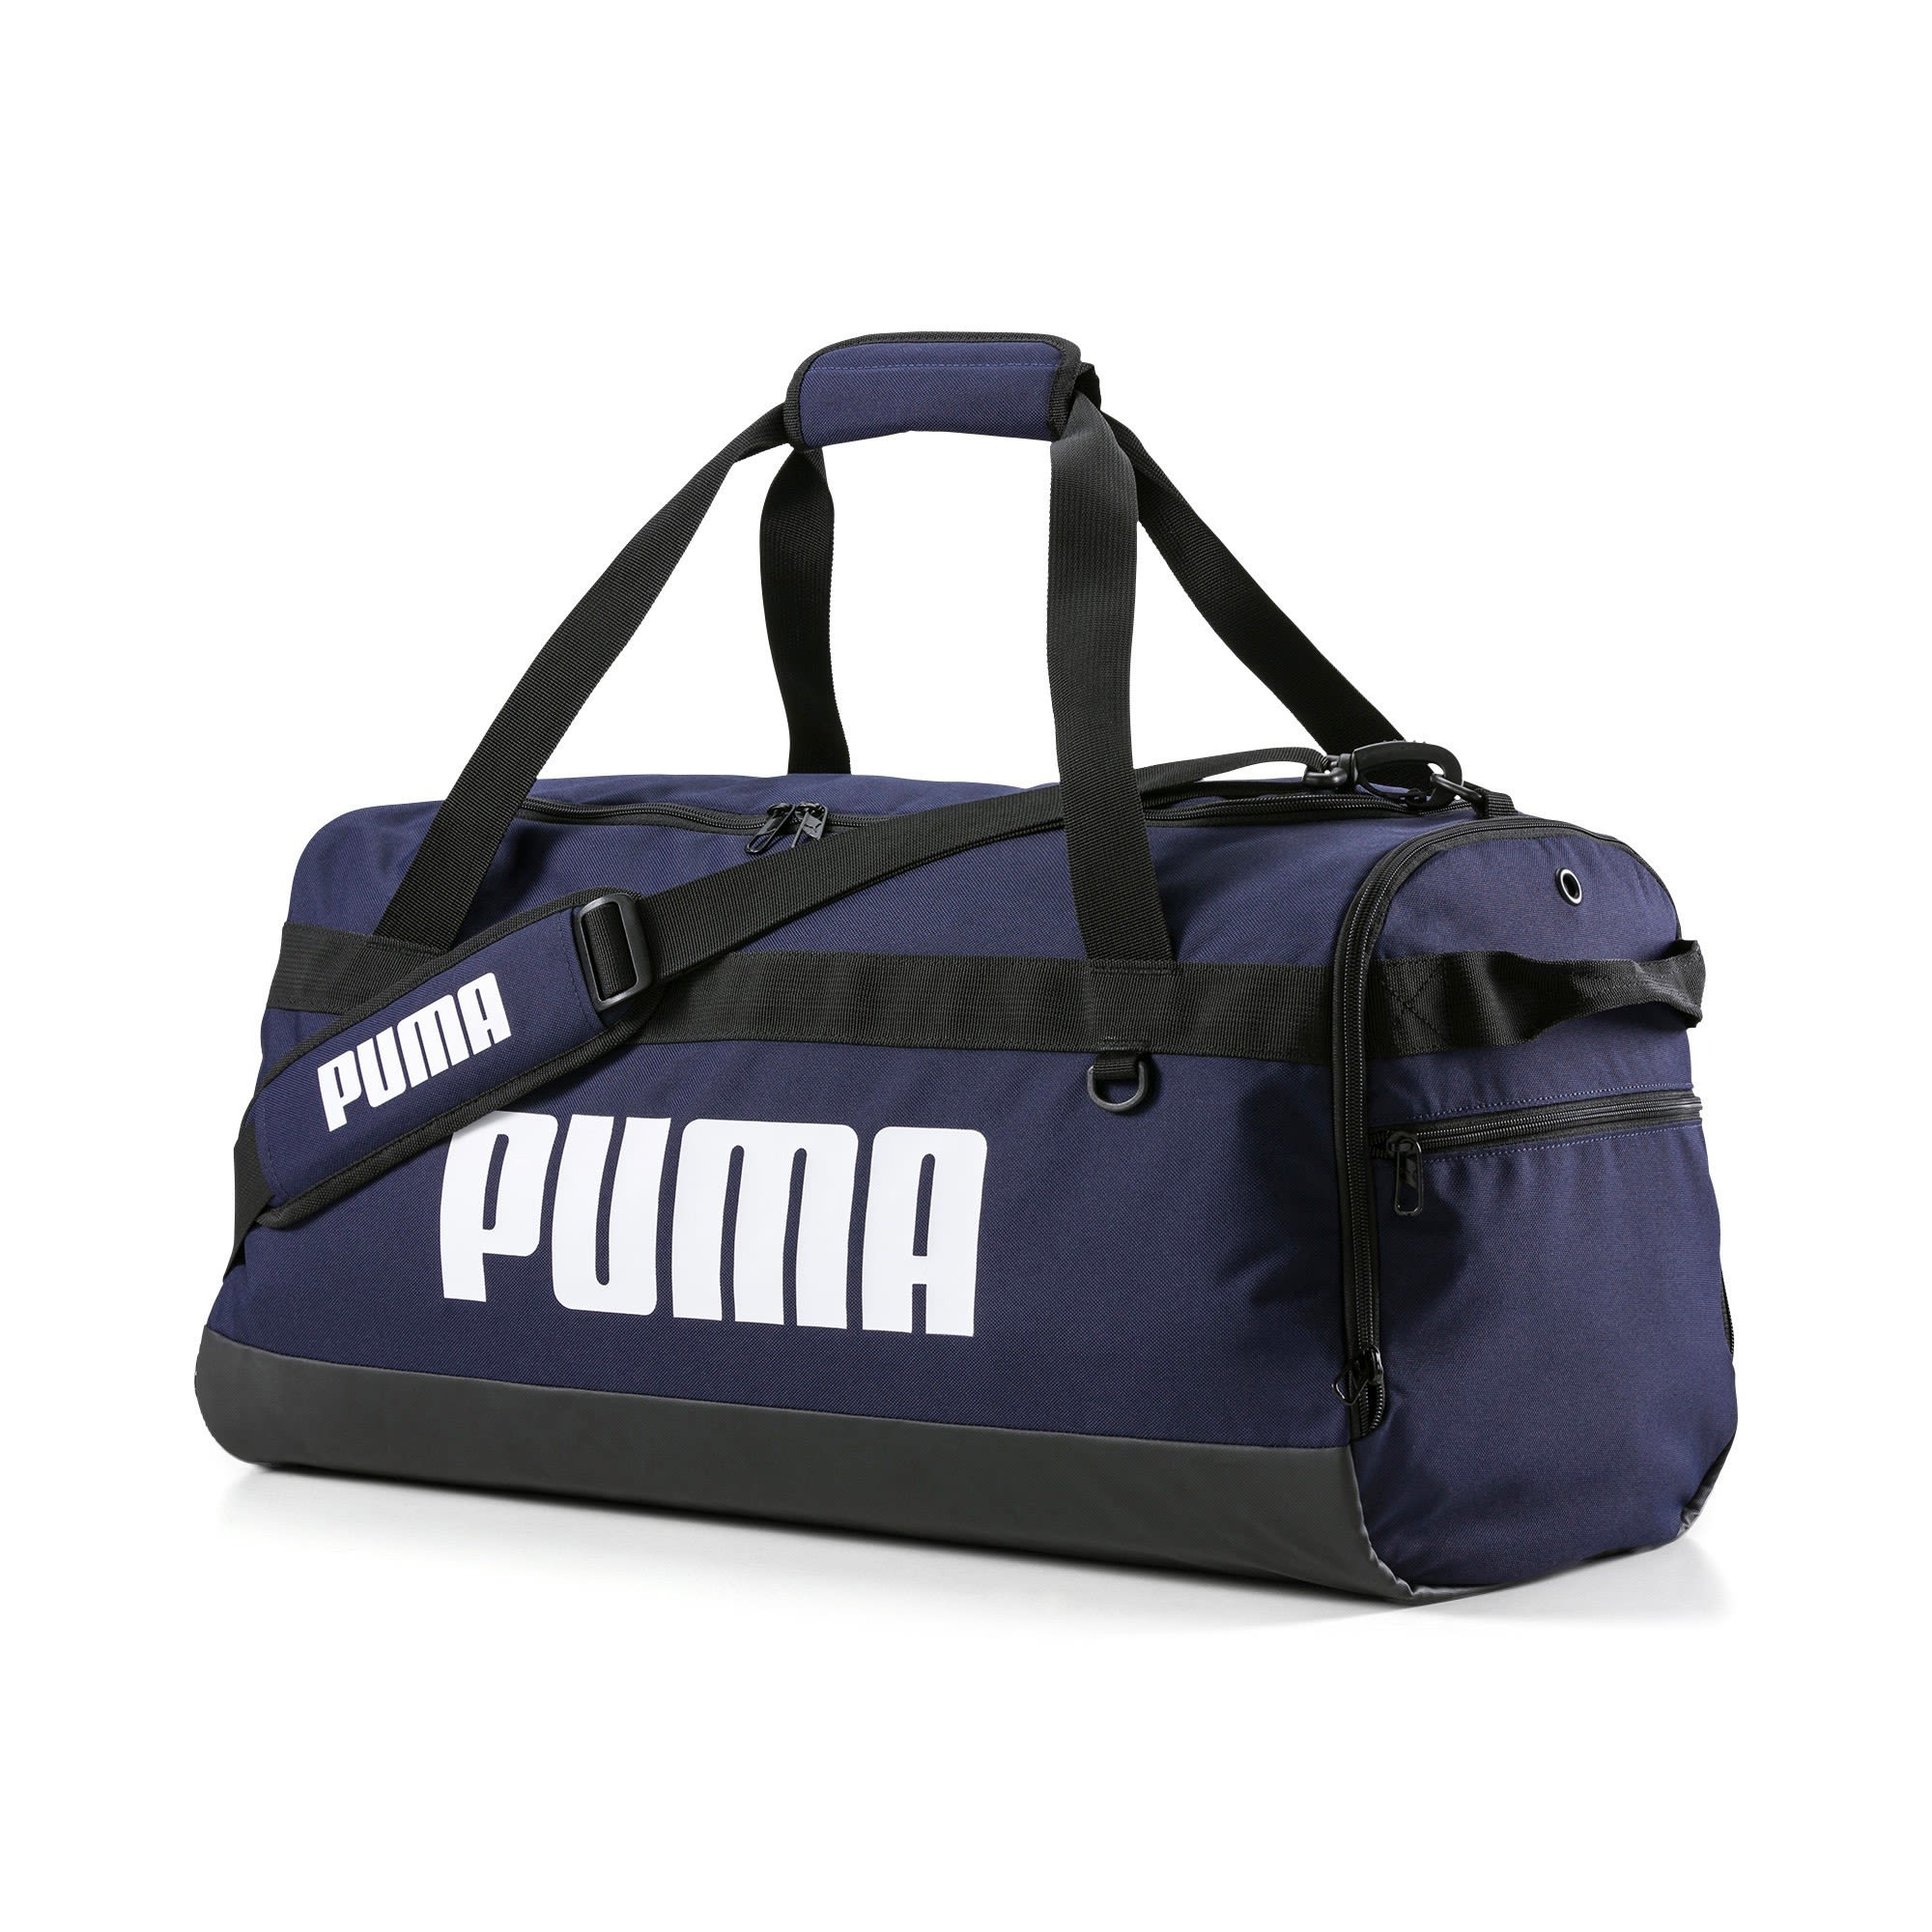 Puma Challenger Duffel Bag Blau- Sporttaschen- Grsse 58l - Farbe Peacoat unter Puma